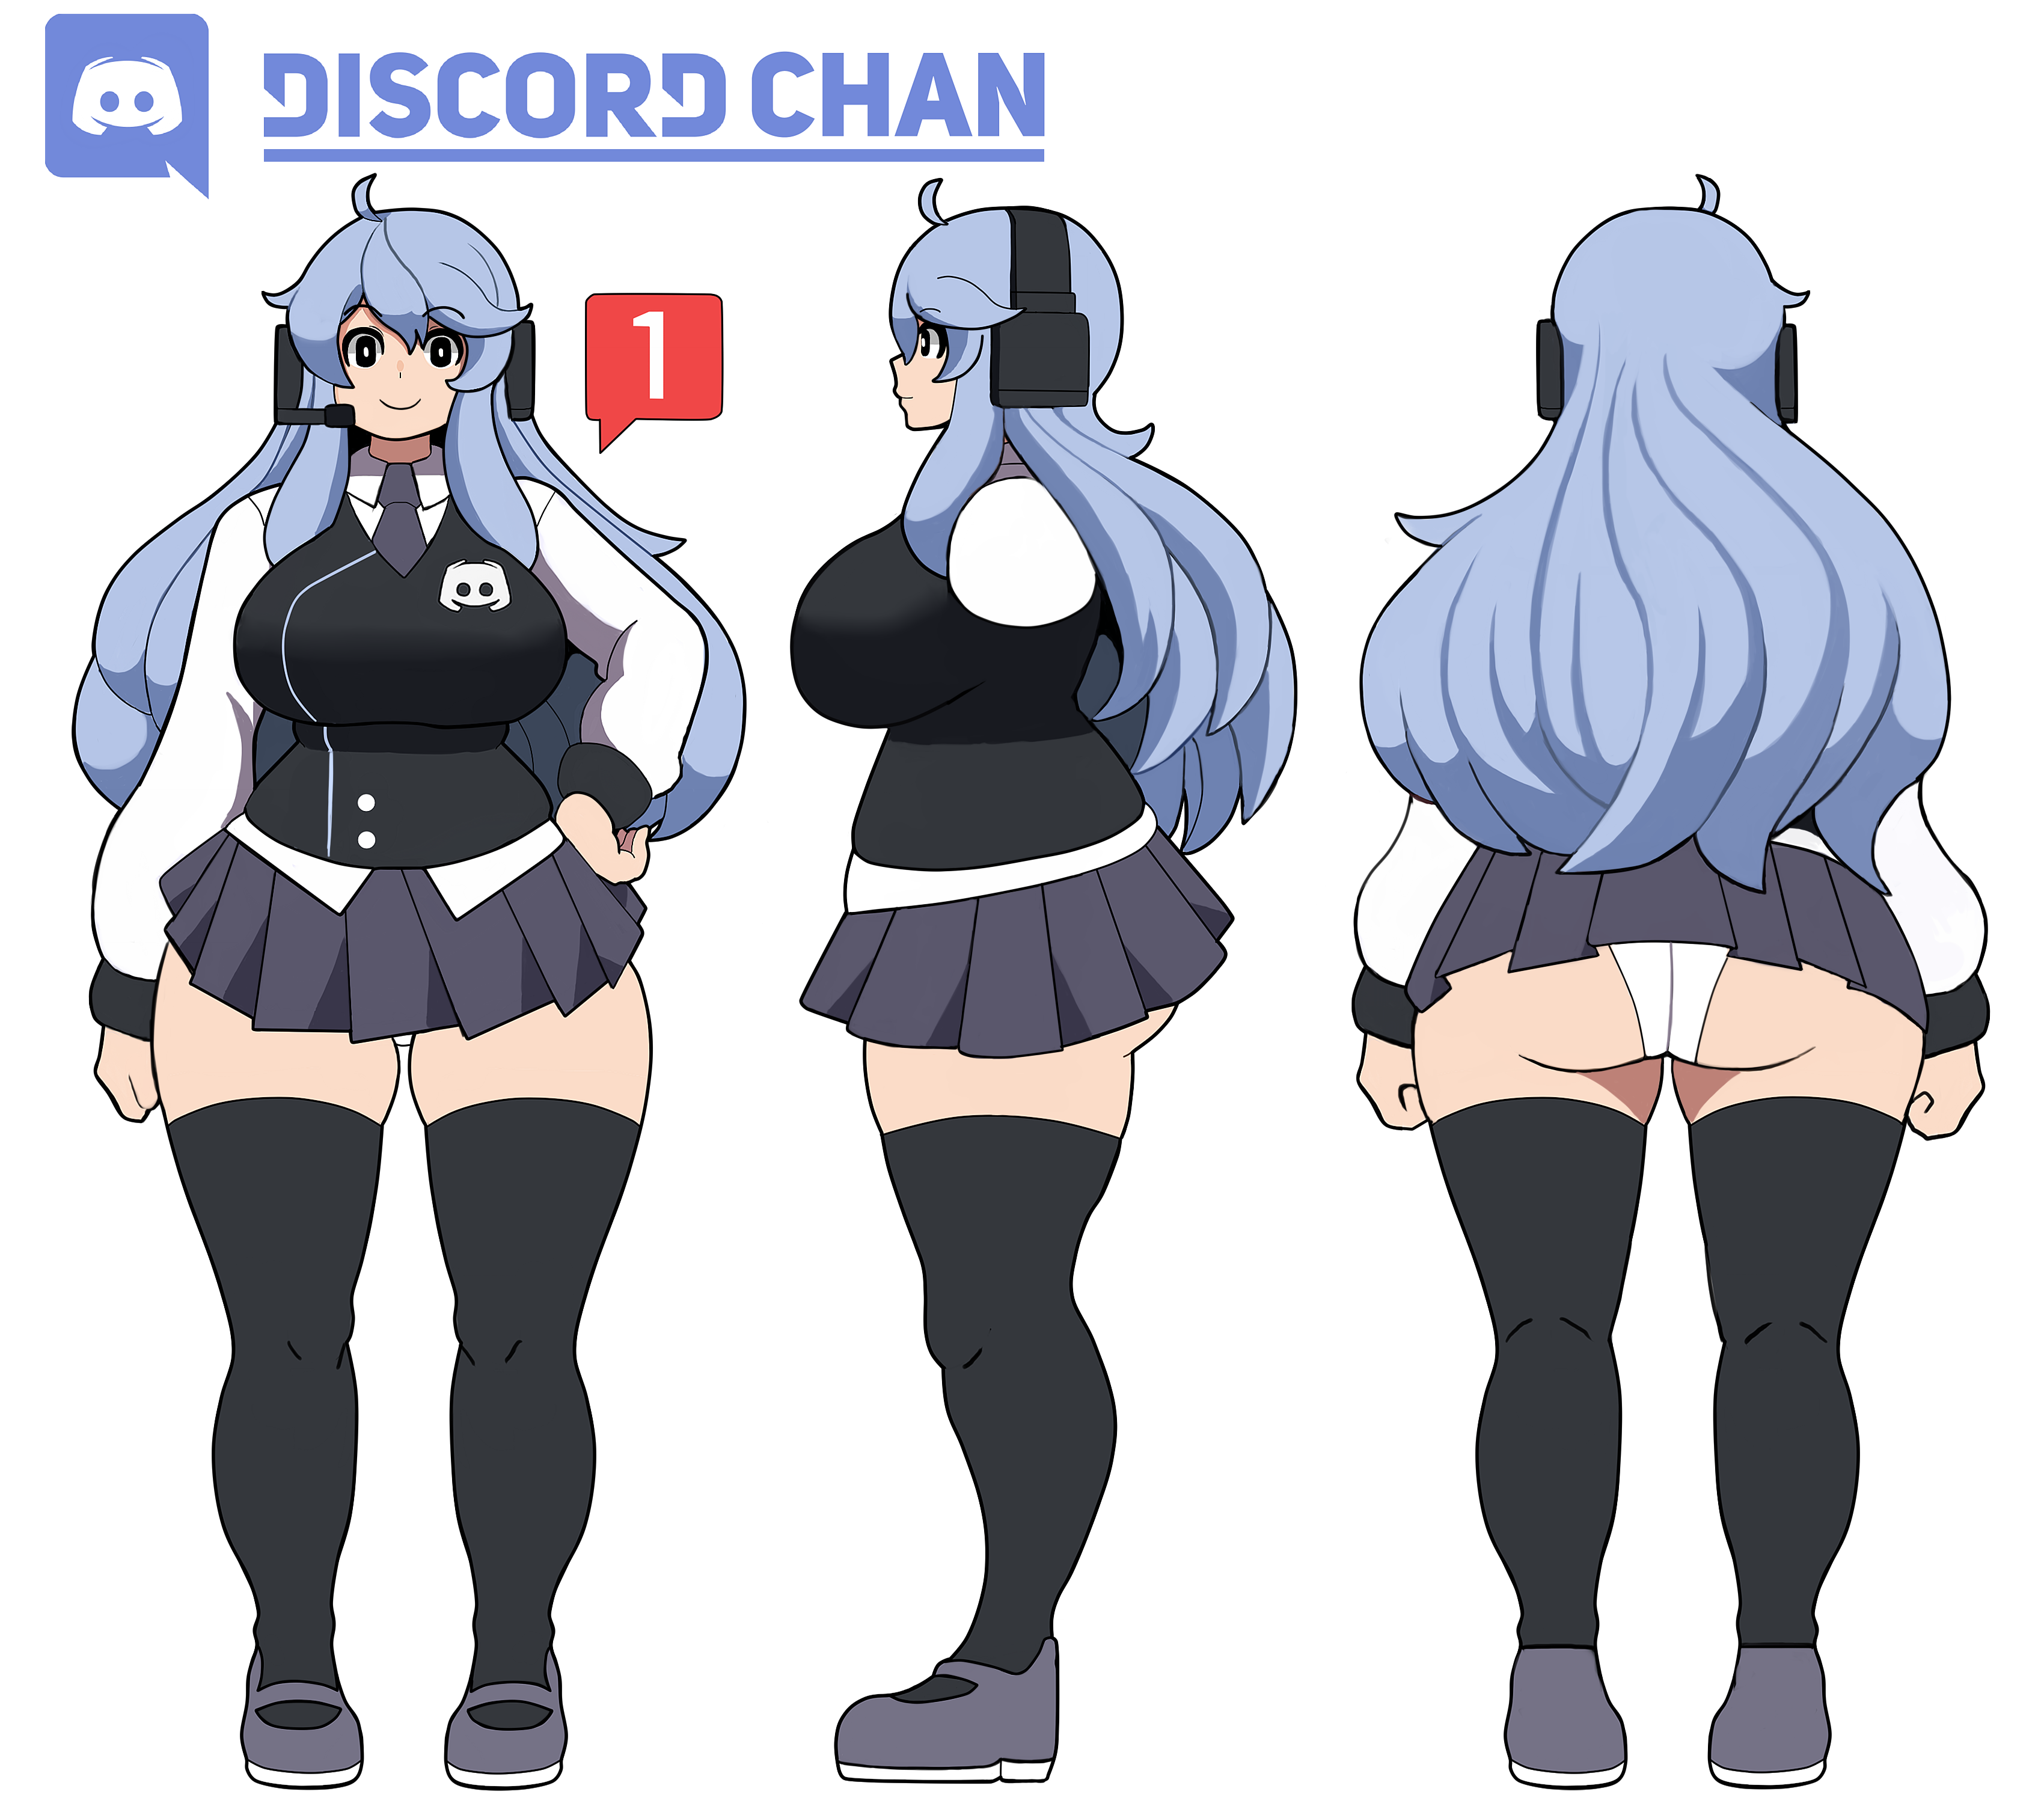 discord chan+original character.